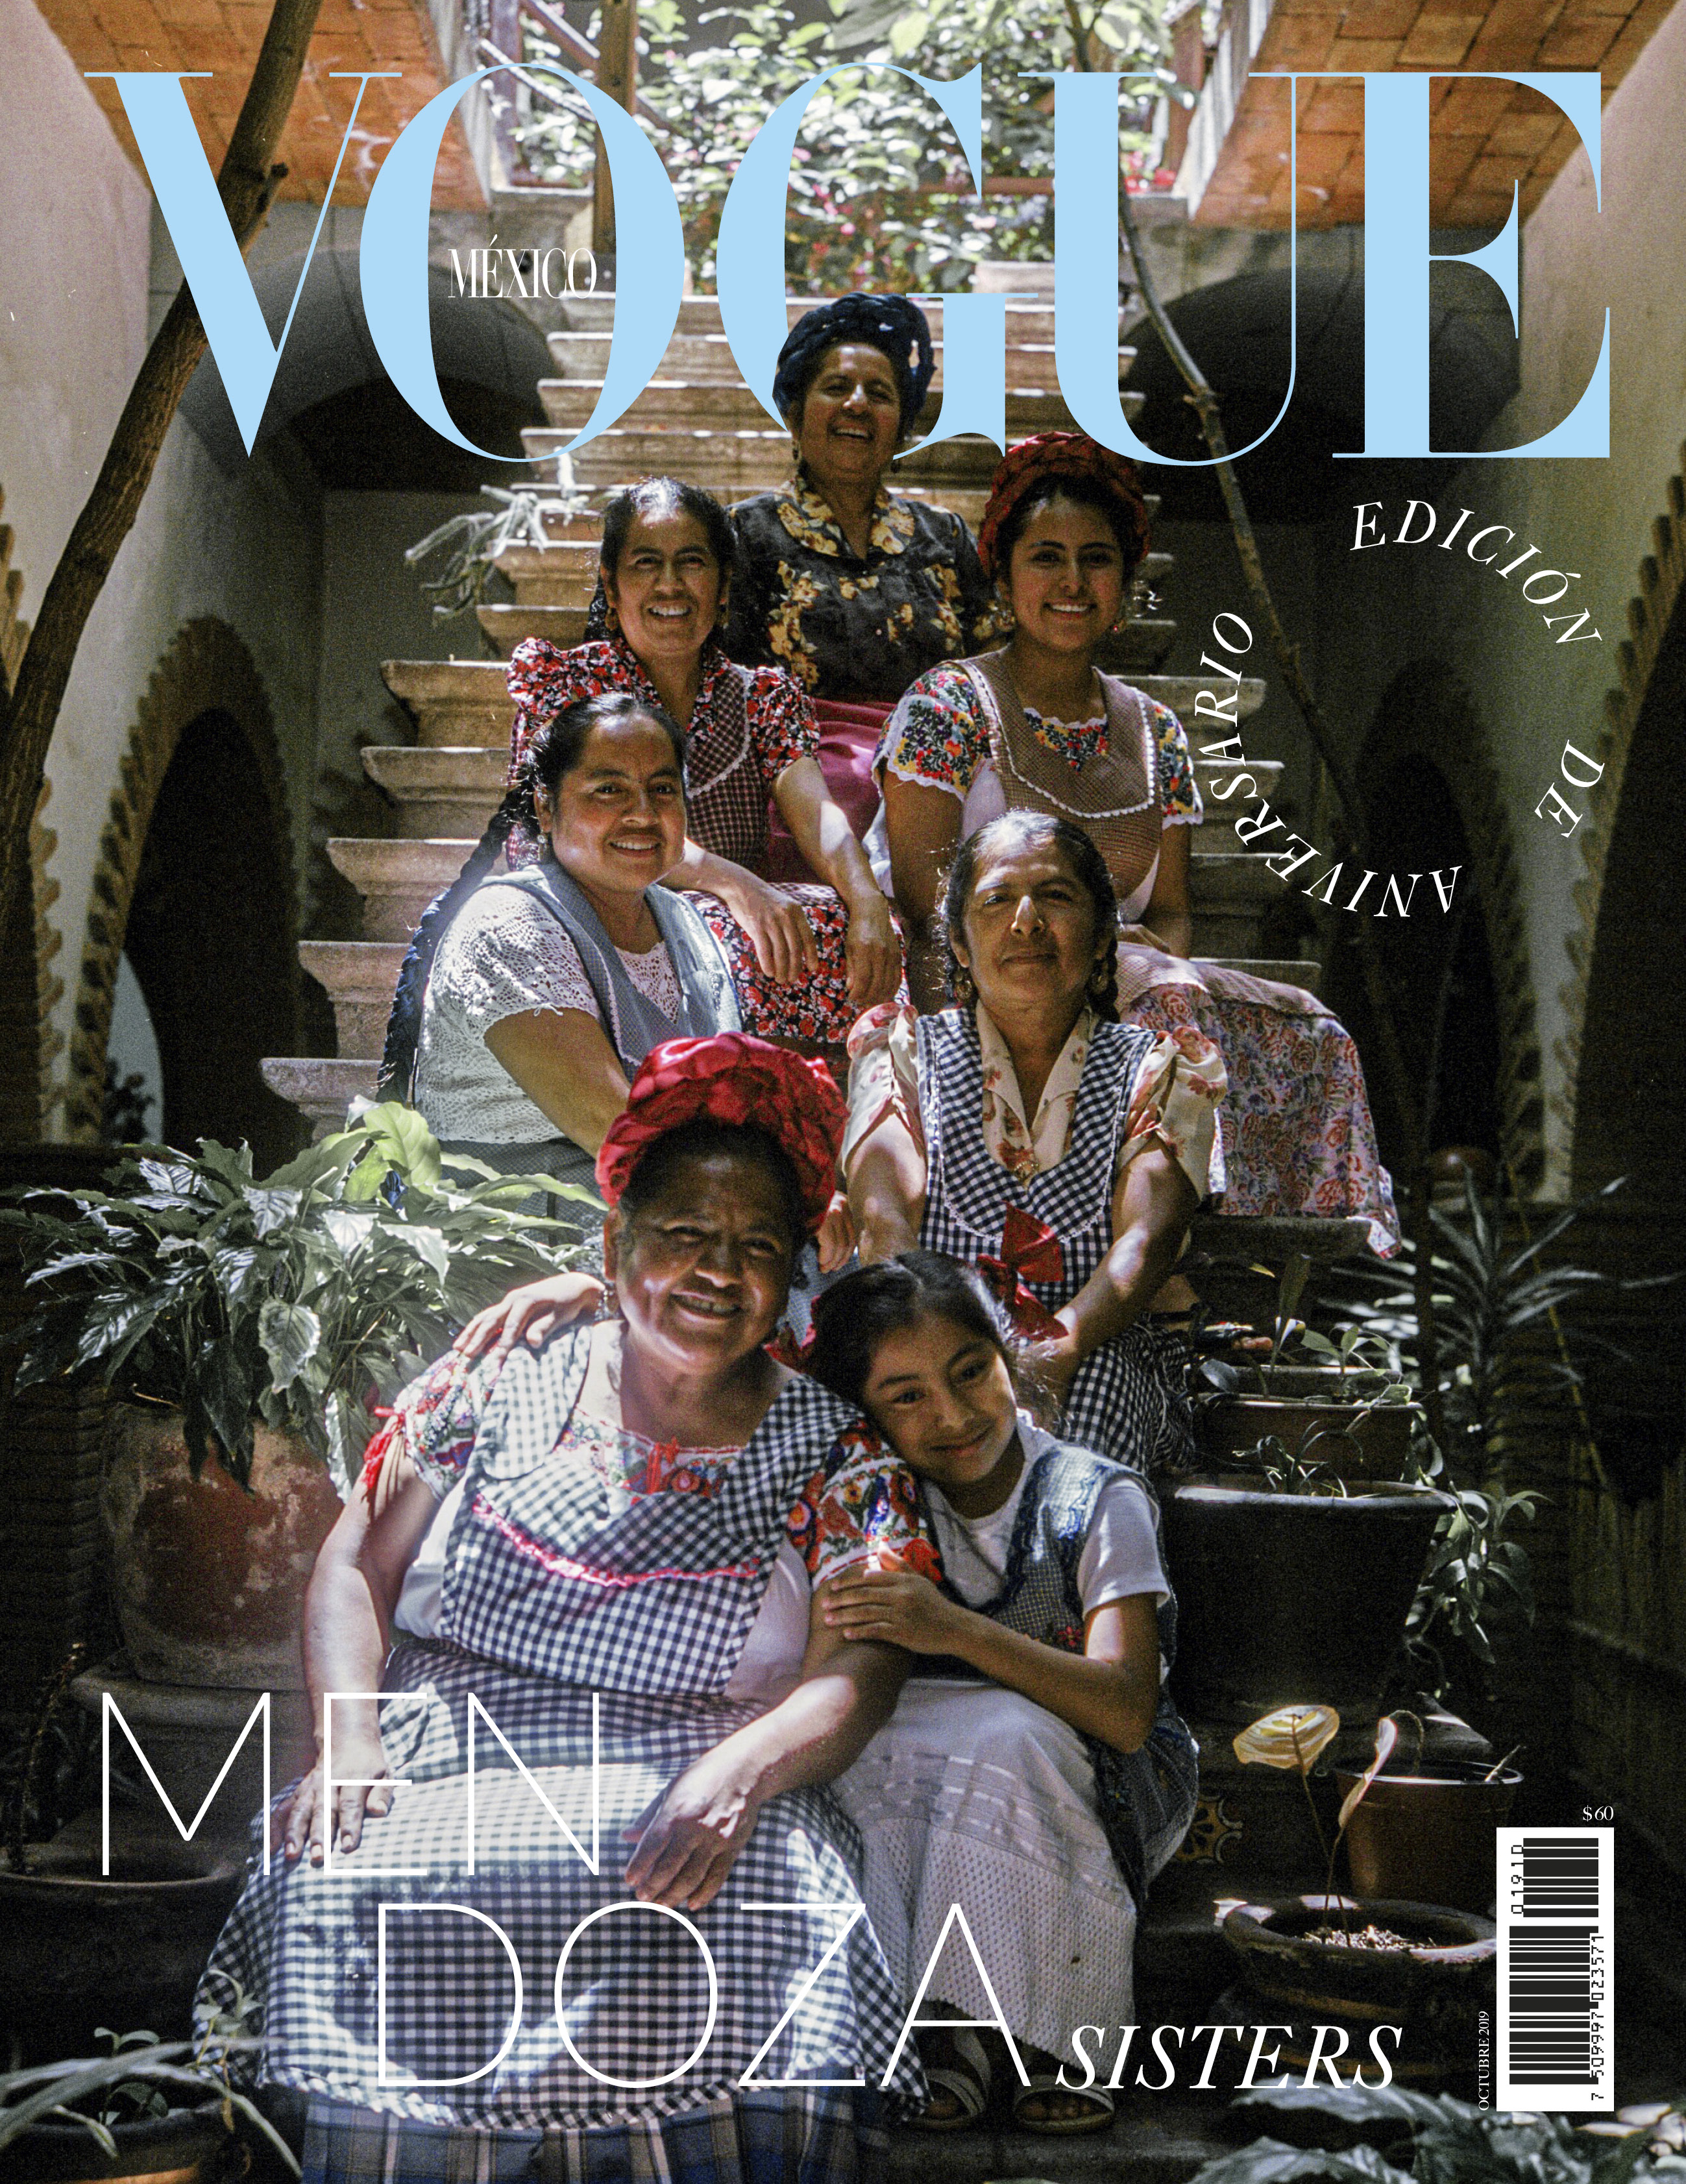 In Vogue North America @voguemexico and Vogue Asia @voguekorea @vogue @ voguerunway @voguemagazine @voguemexico @voguekorea As seen on…